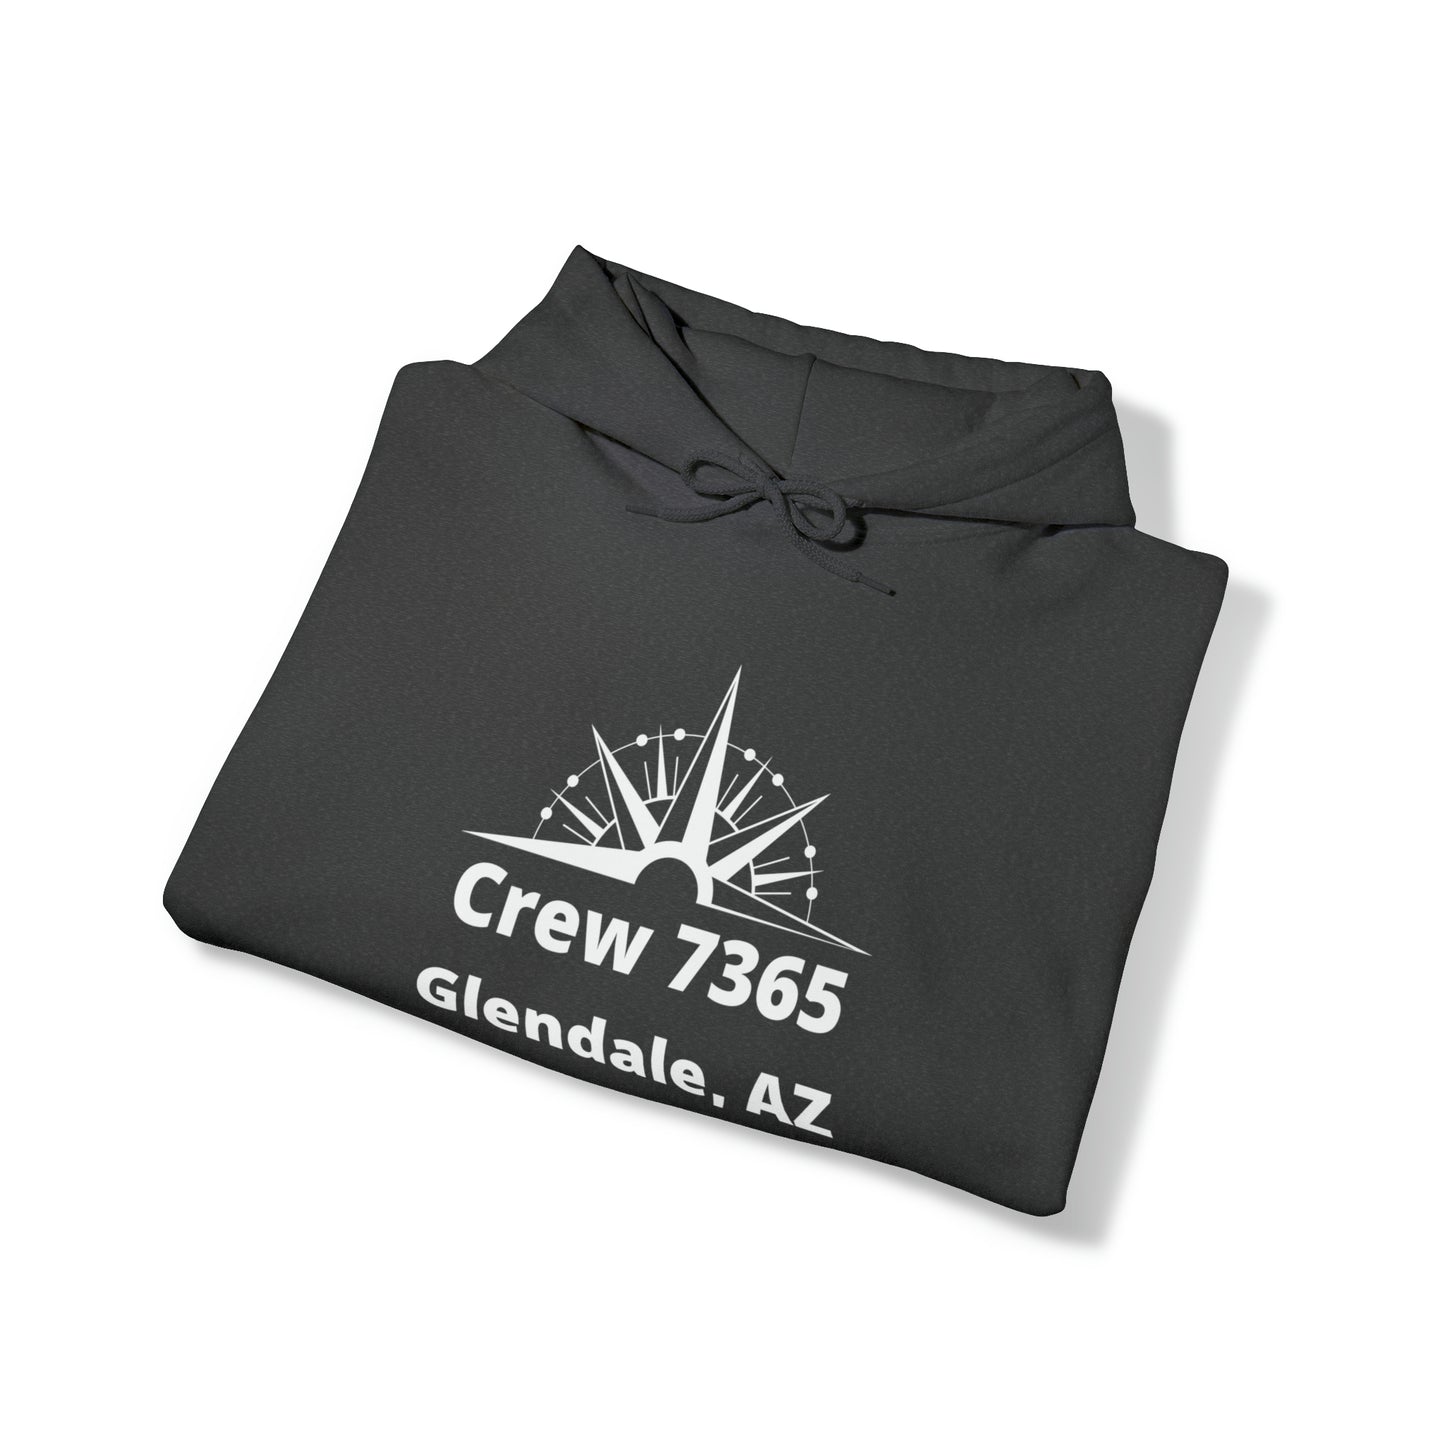 Crew 7365 - Founder Hoodie